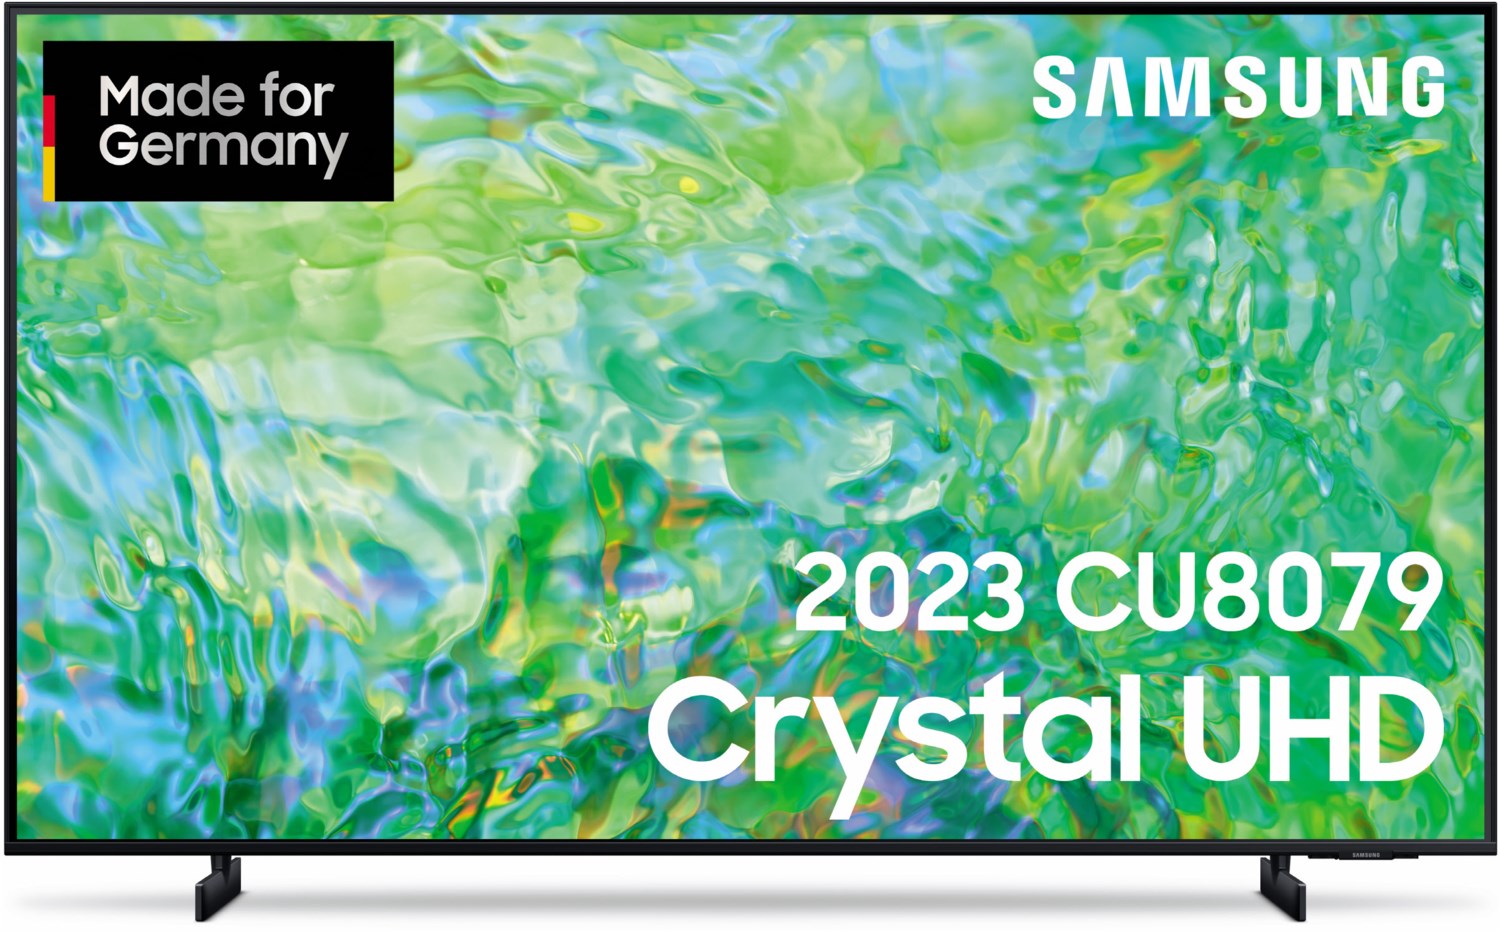 Samsung Chrystal UHD TV 4K 75 Zoll (189 cm) schwarz